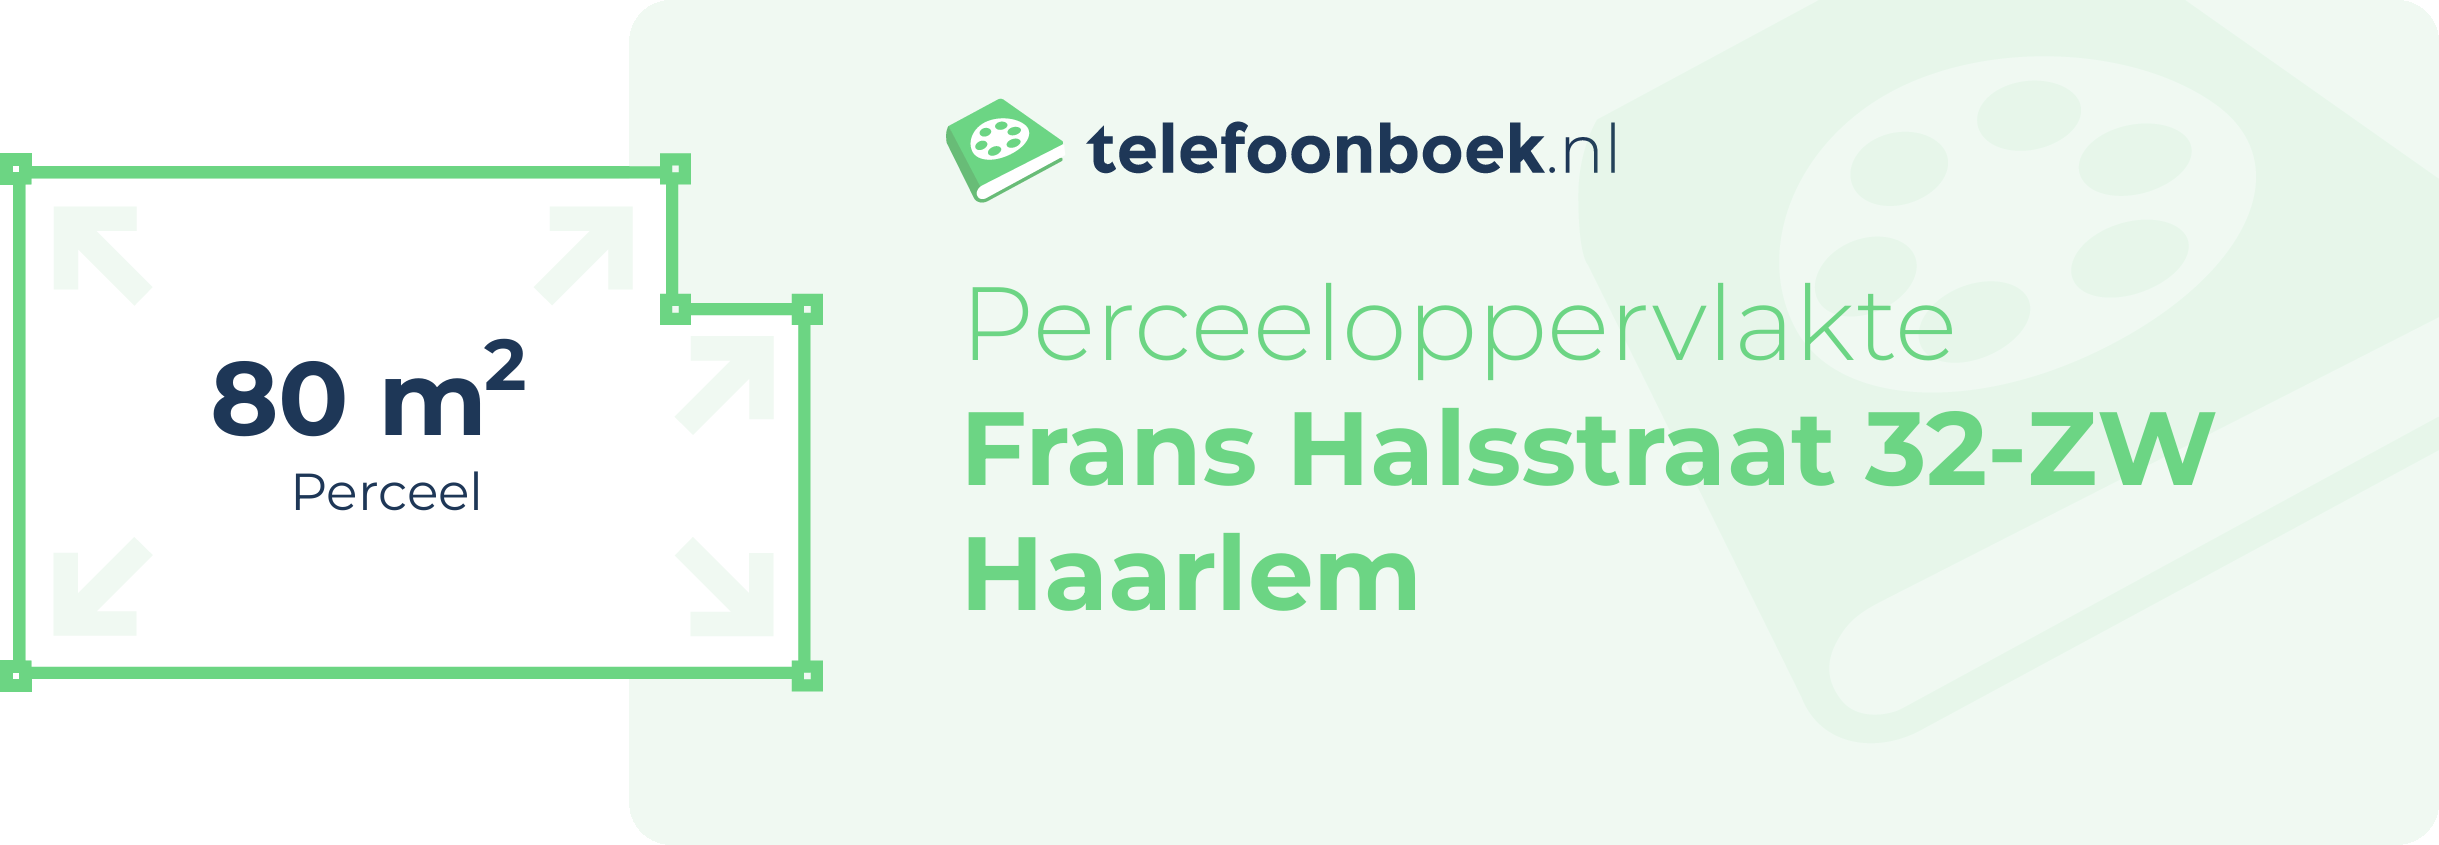 Perceeloppervlakte Frans Halsstraat 32-ZW Haarlem